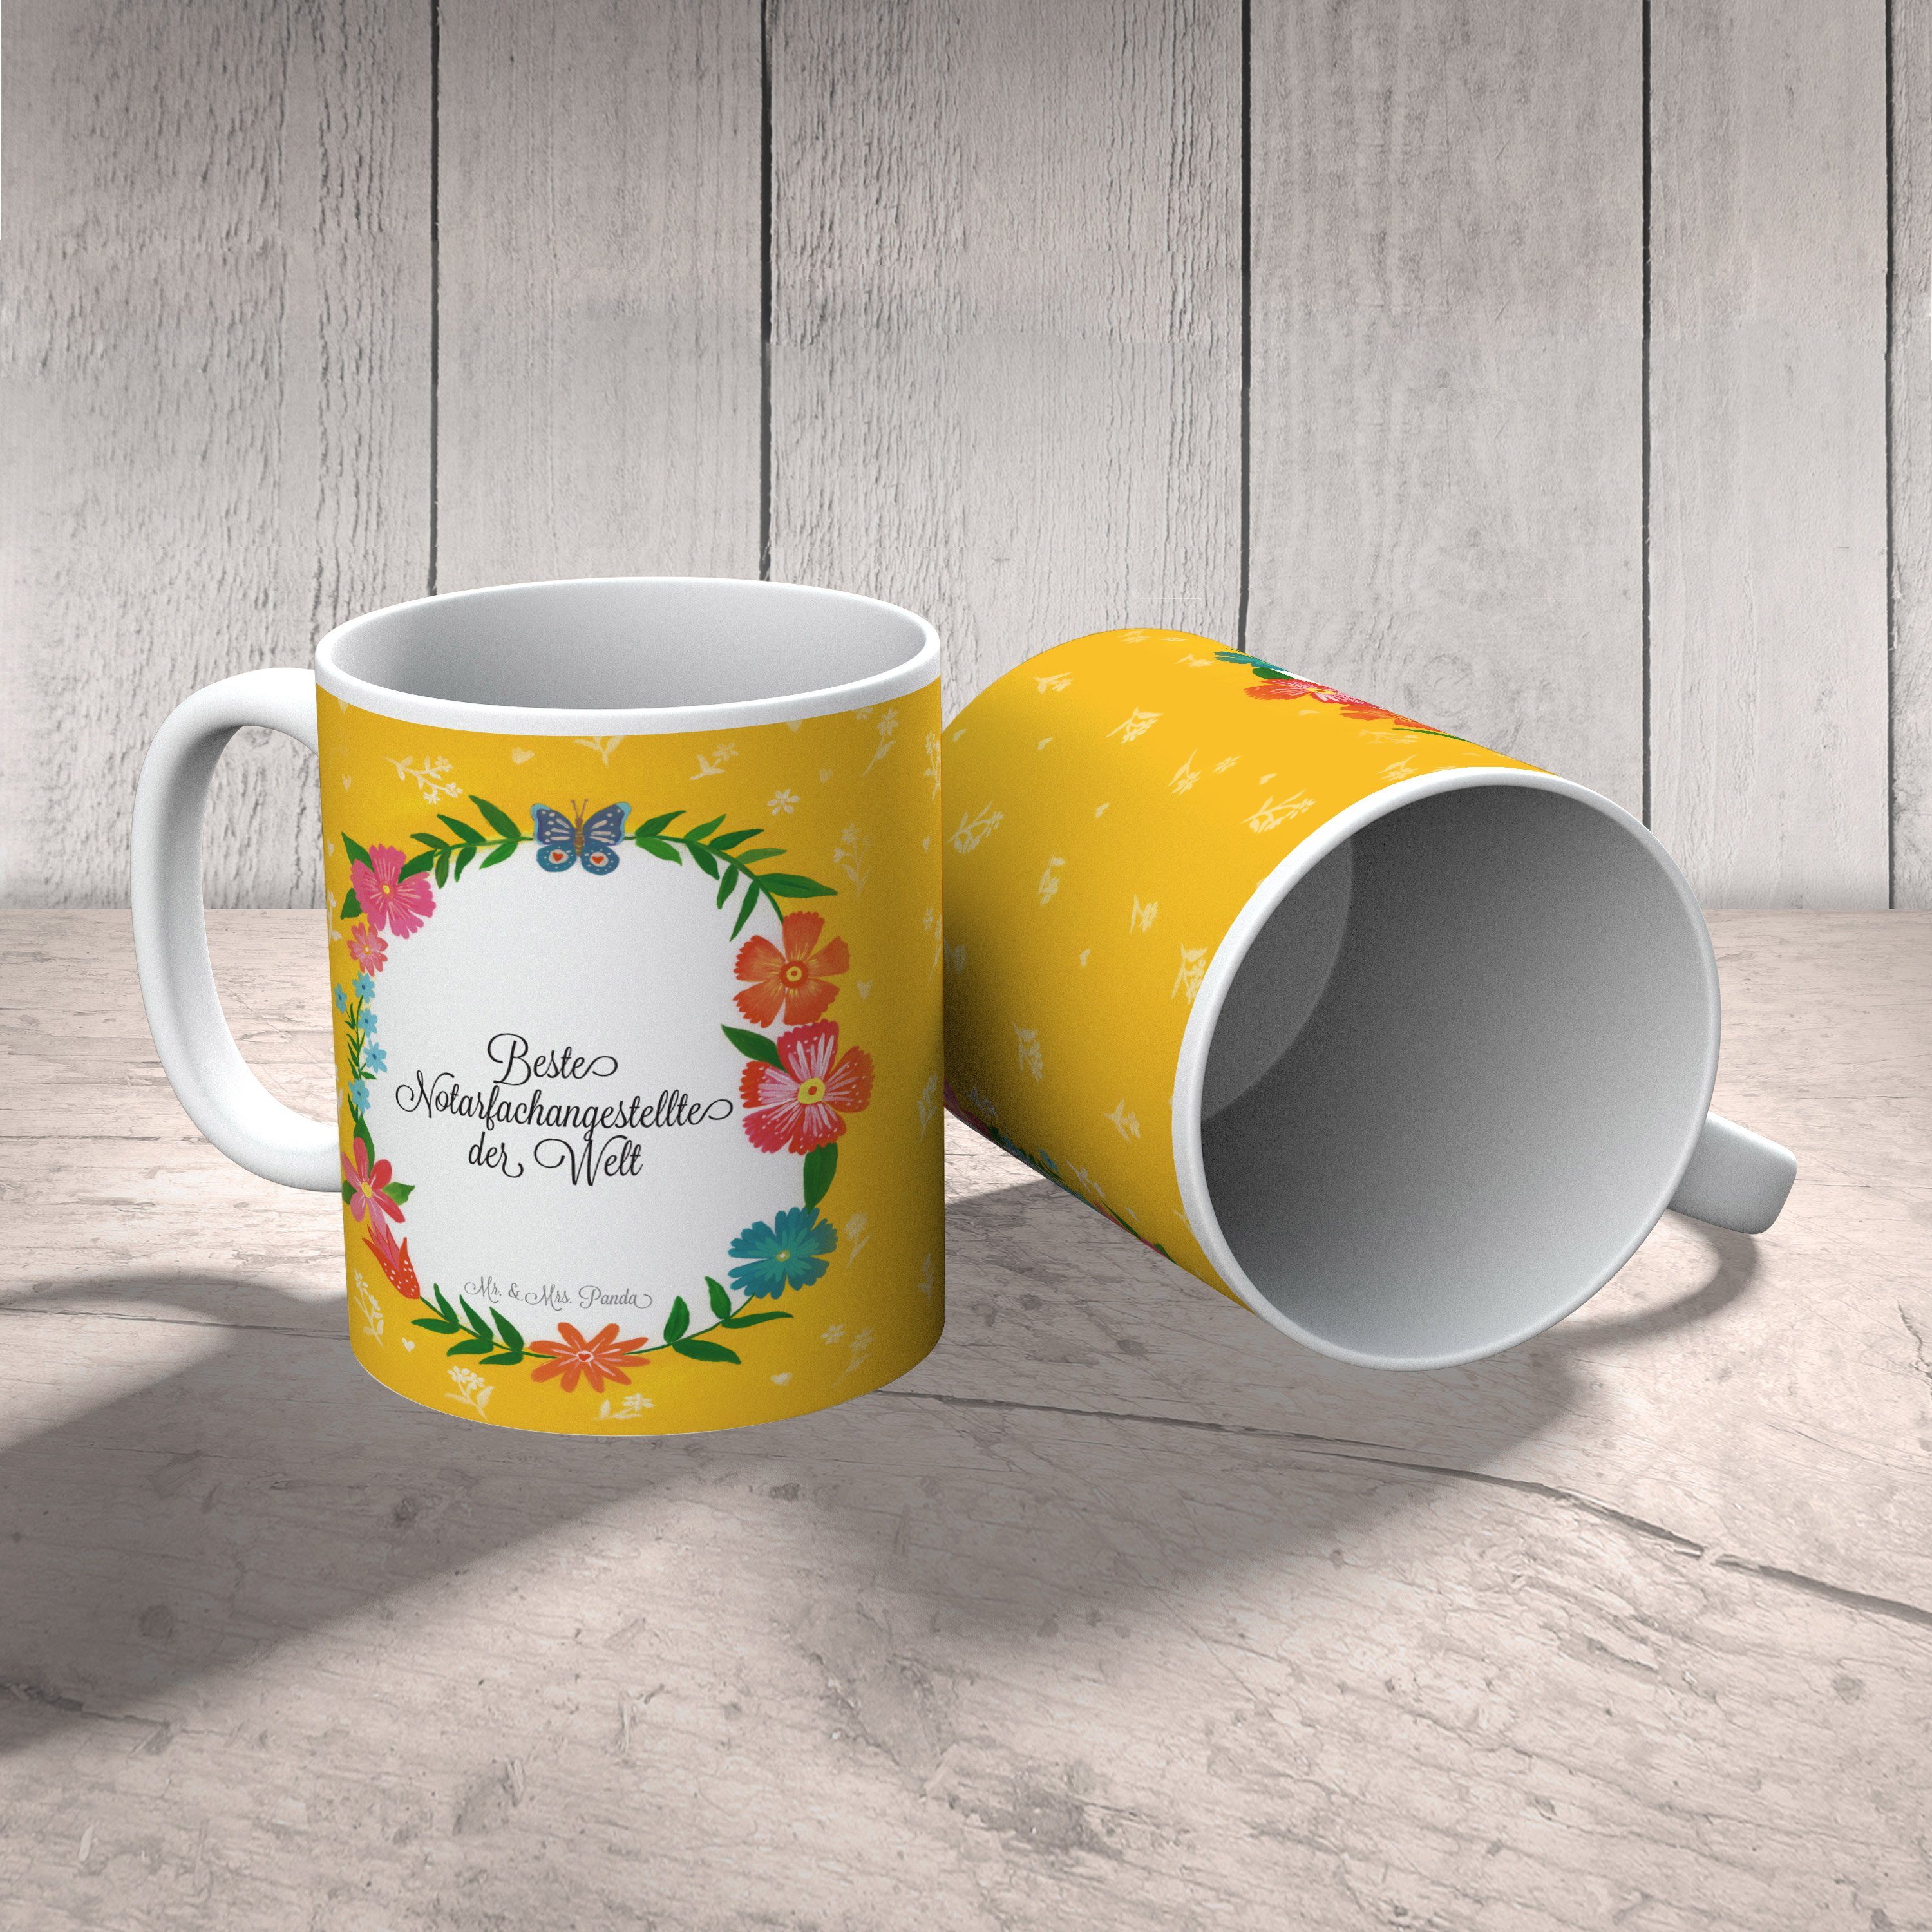 Geschenk, Panda Mr. Abschluss, - Mrs. Kaffeebecher, Gratulation, Keramik & Notarfachangestellte Tasse